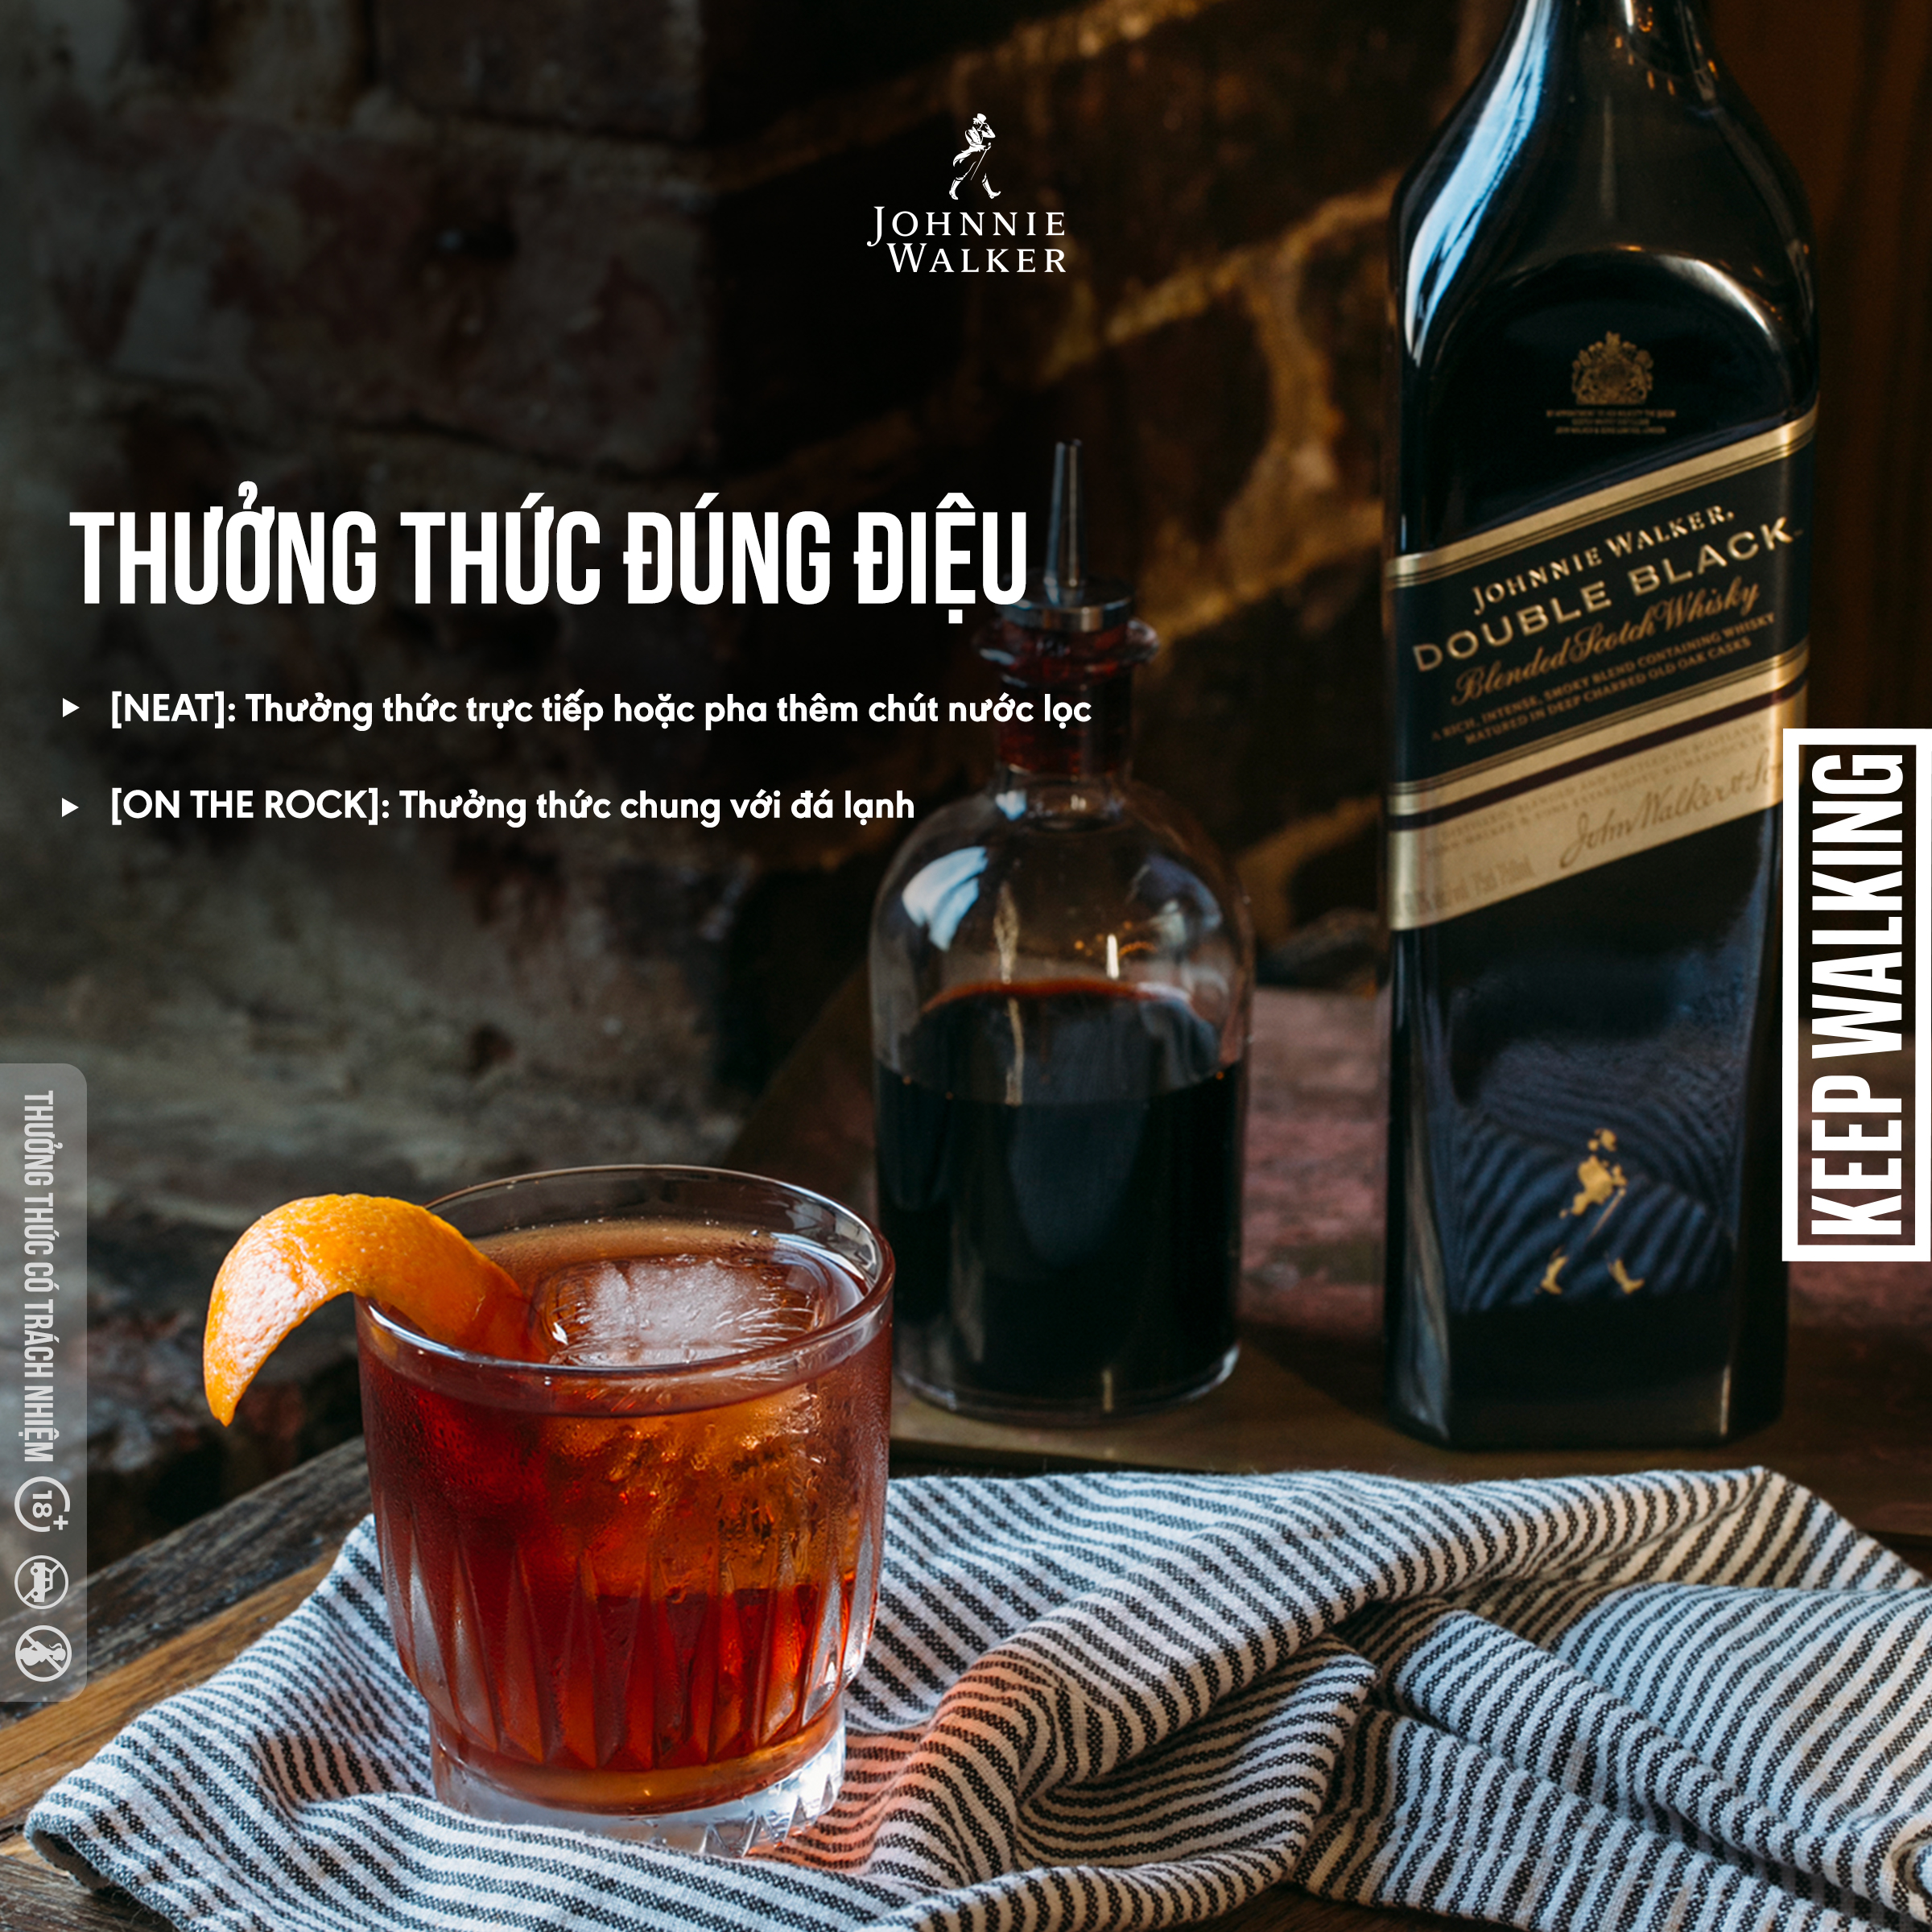 Rượu Johnnie Walker Double Black Label Blended Scotch Whisky 40% 750ml